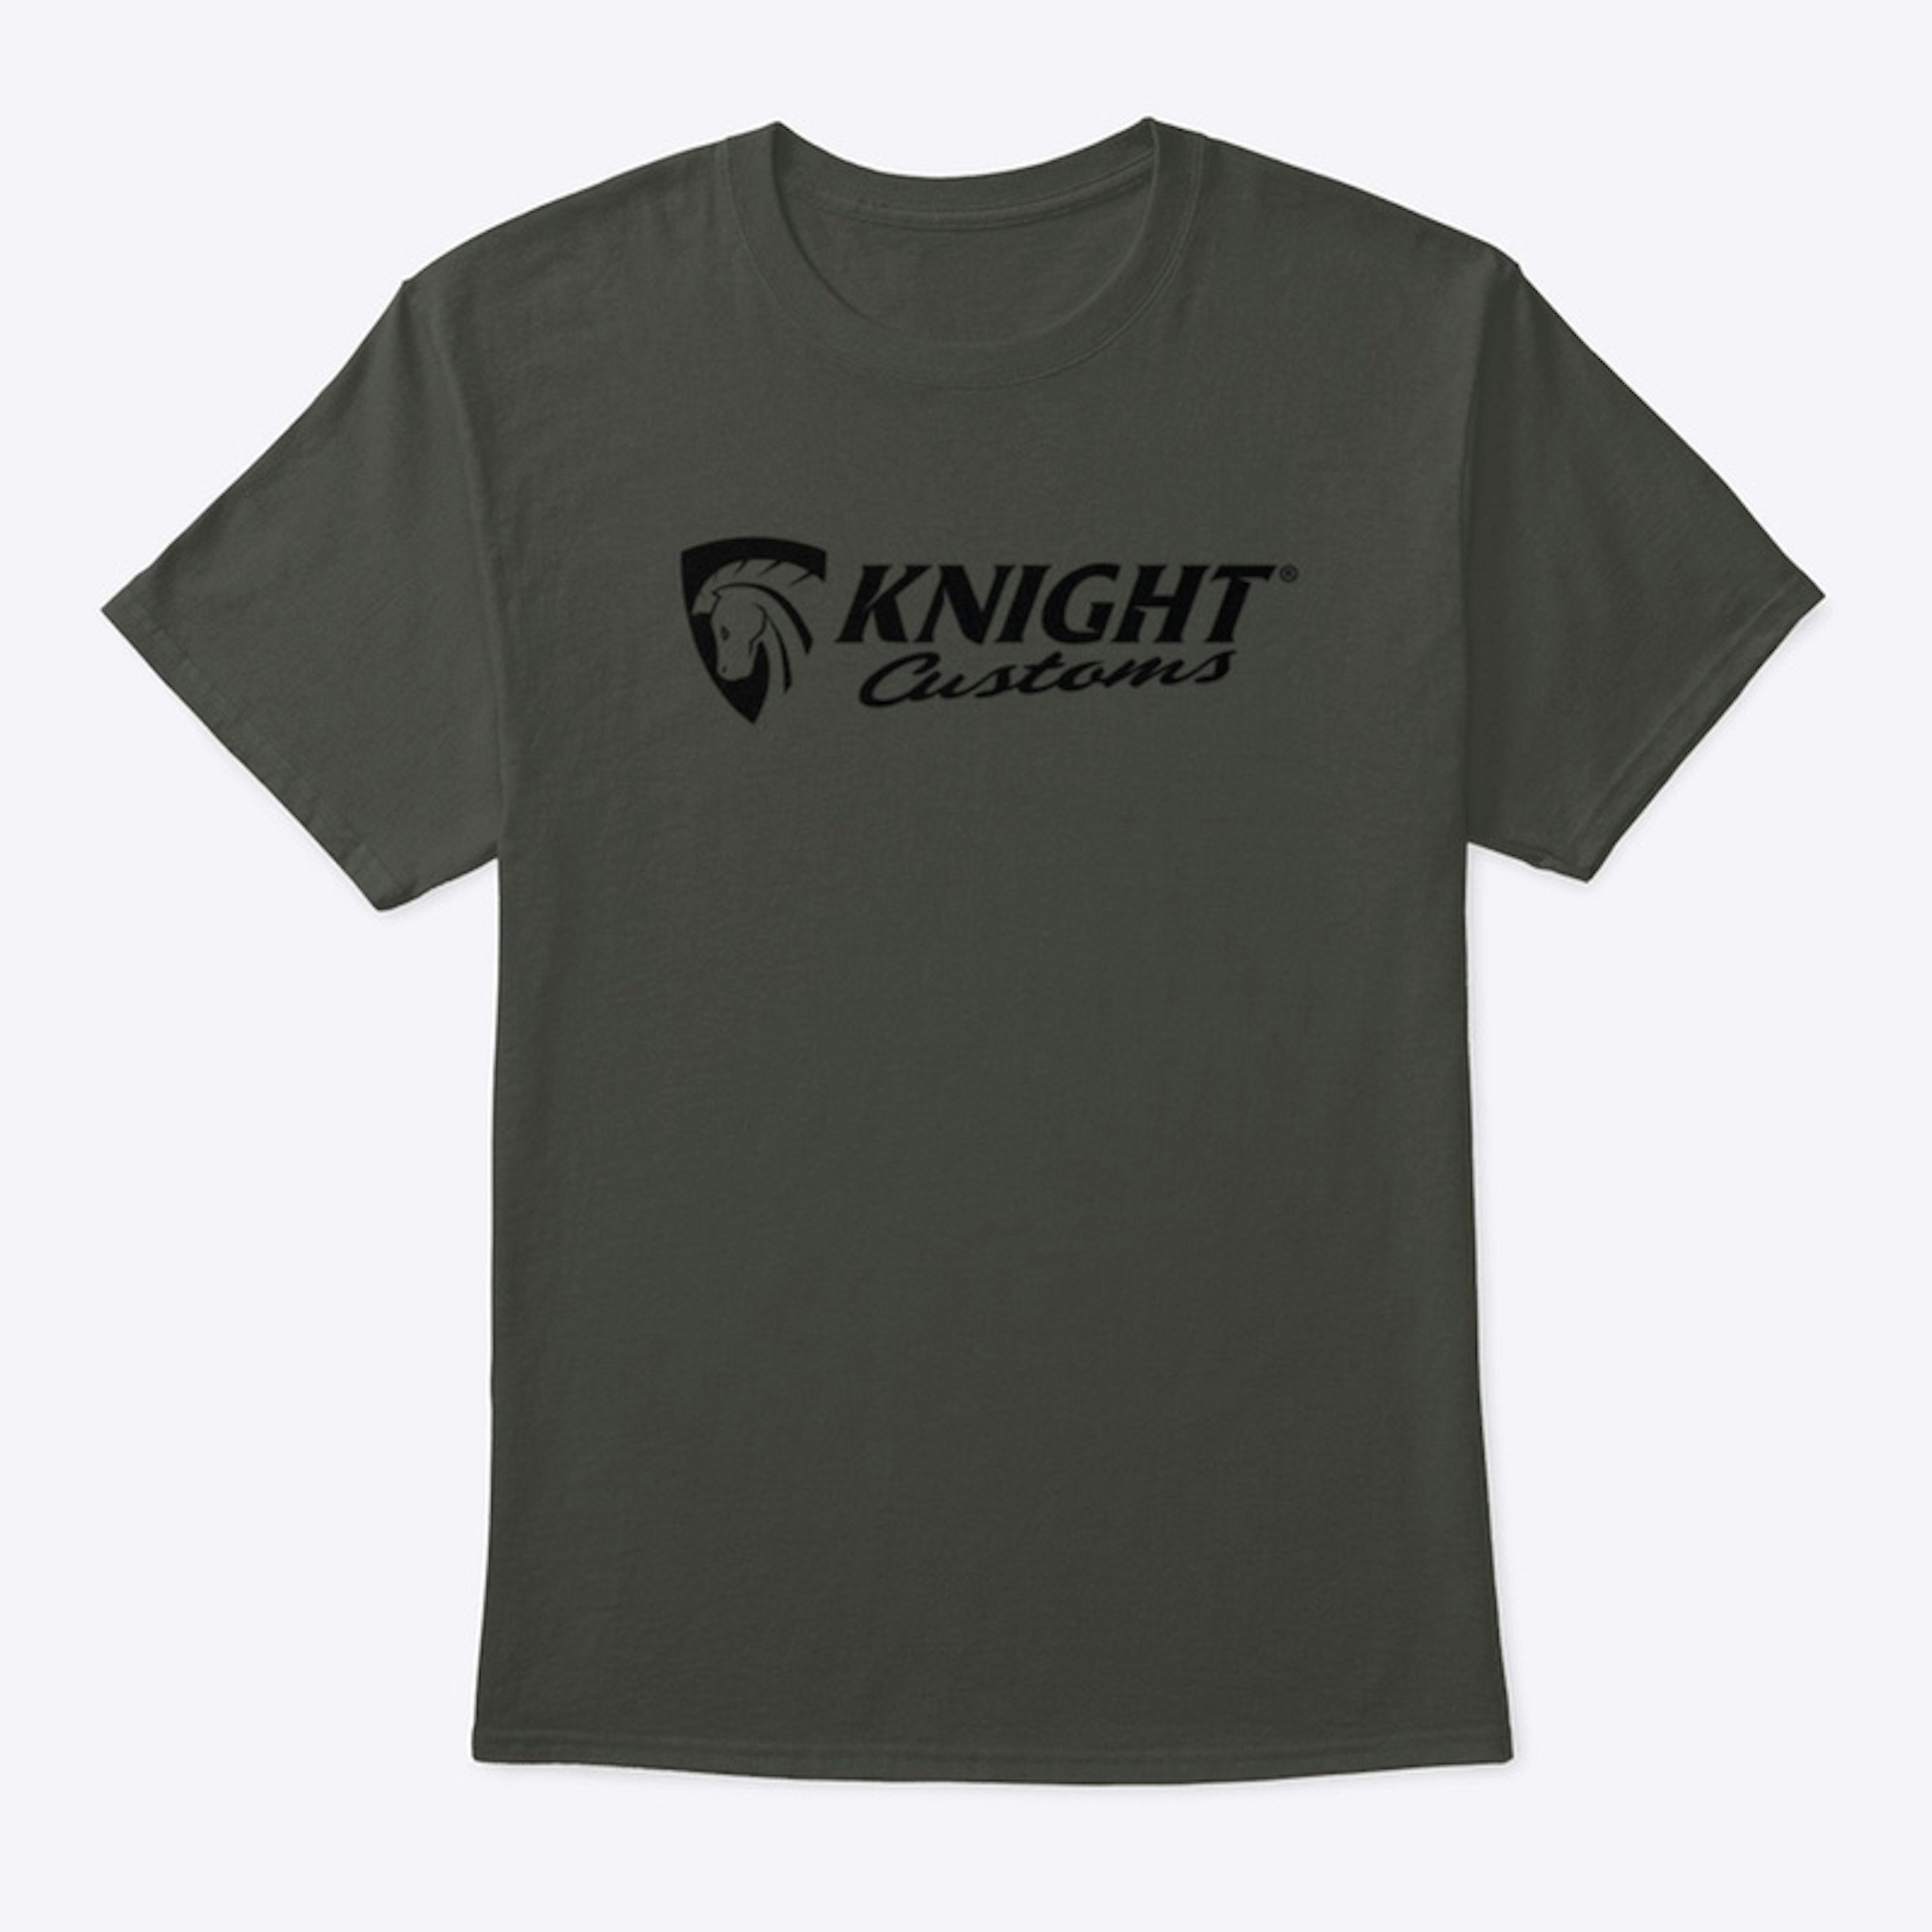 Knight Customs Classic Logo